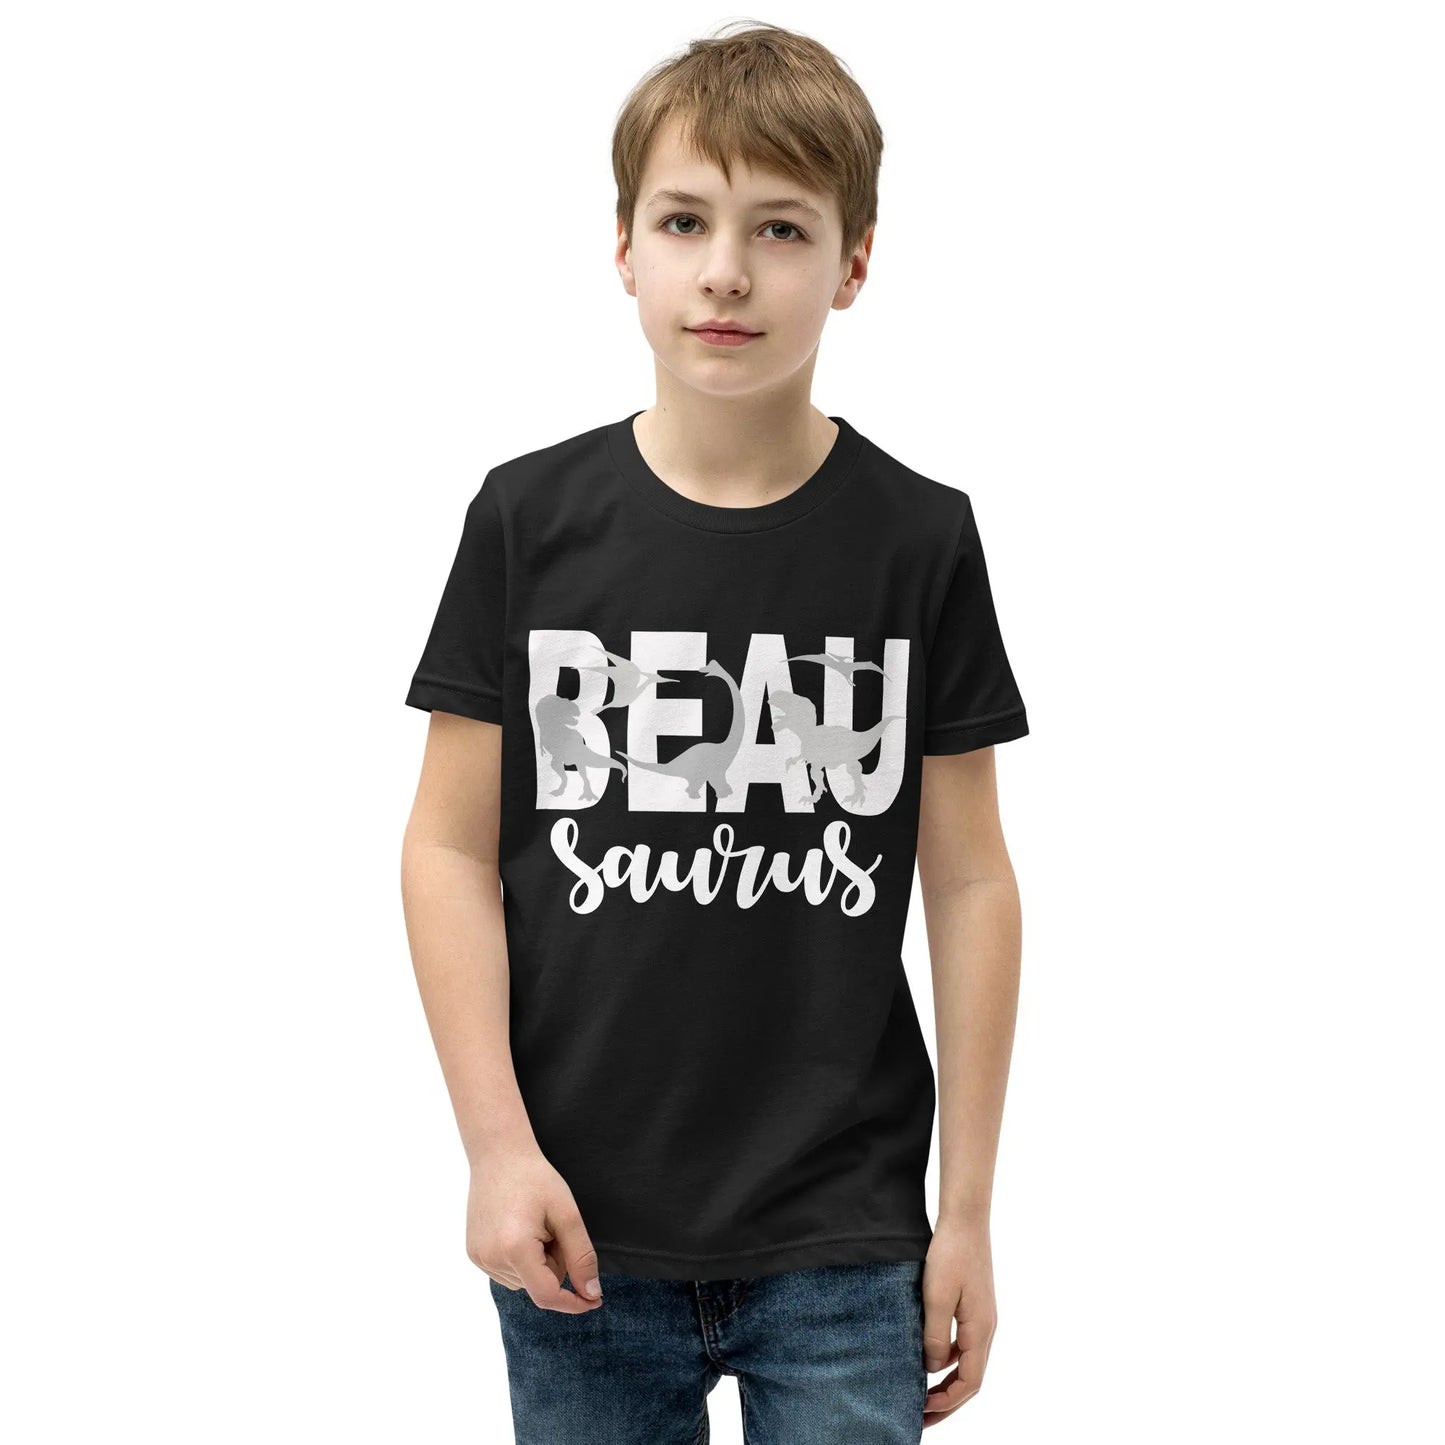 Personalized Dinosaur Kids Shirt, Matching Dinosaur Shirts Amazing Faith Designs